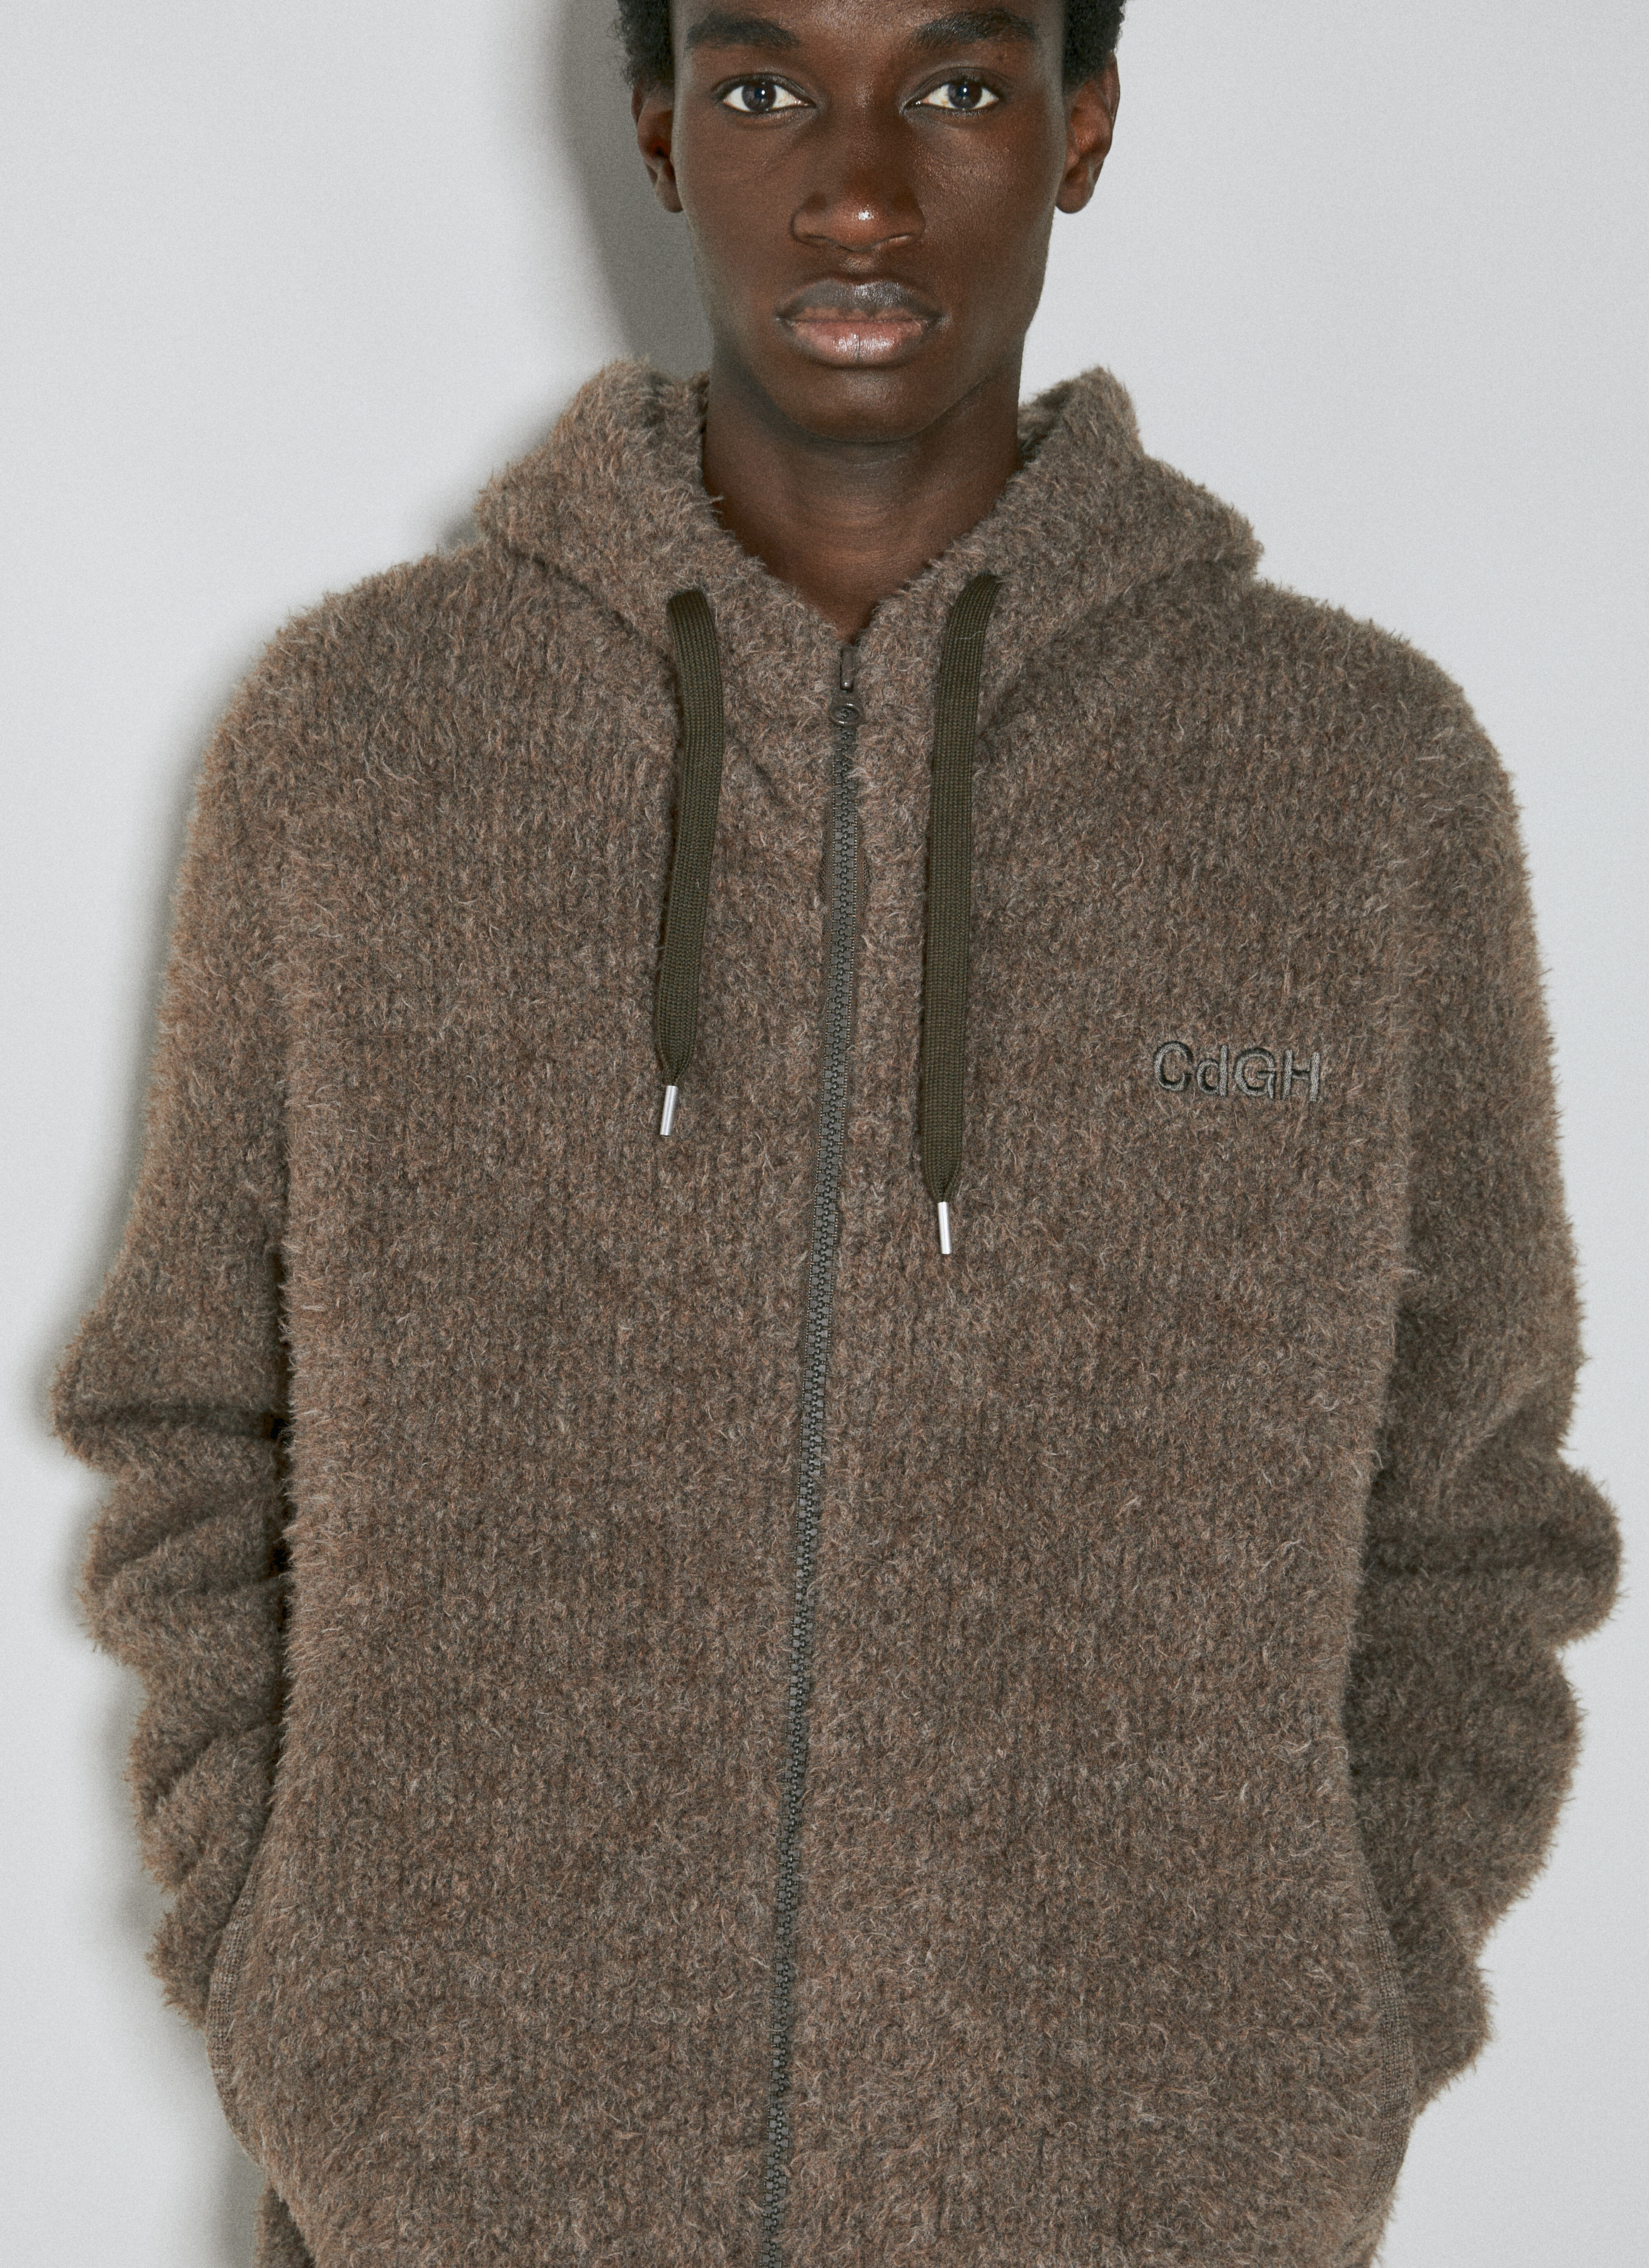 Comme des Garçons Homme Fluffy Knit Hooded Zip-Up Sweatshirt Black cdh0154008